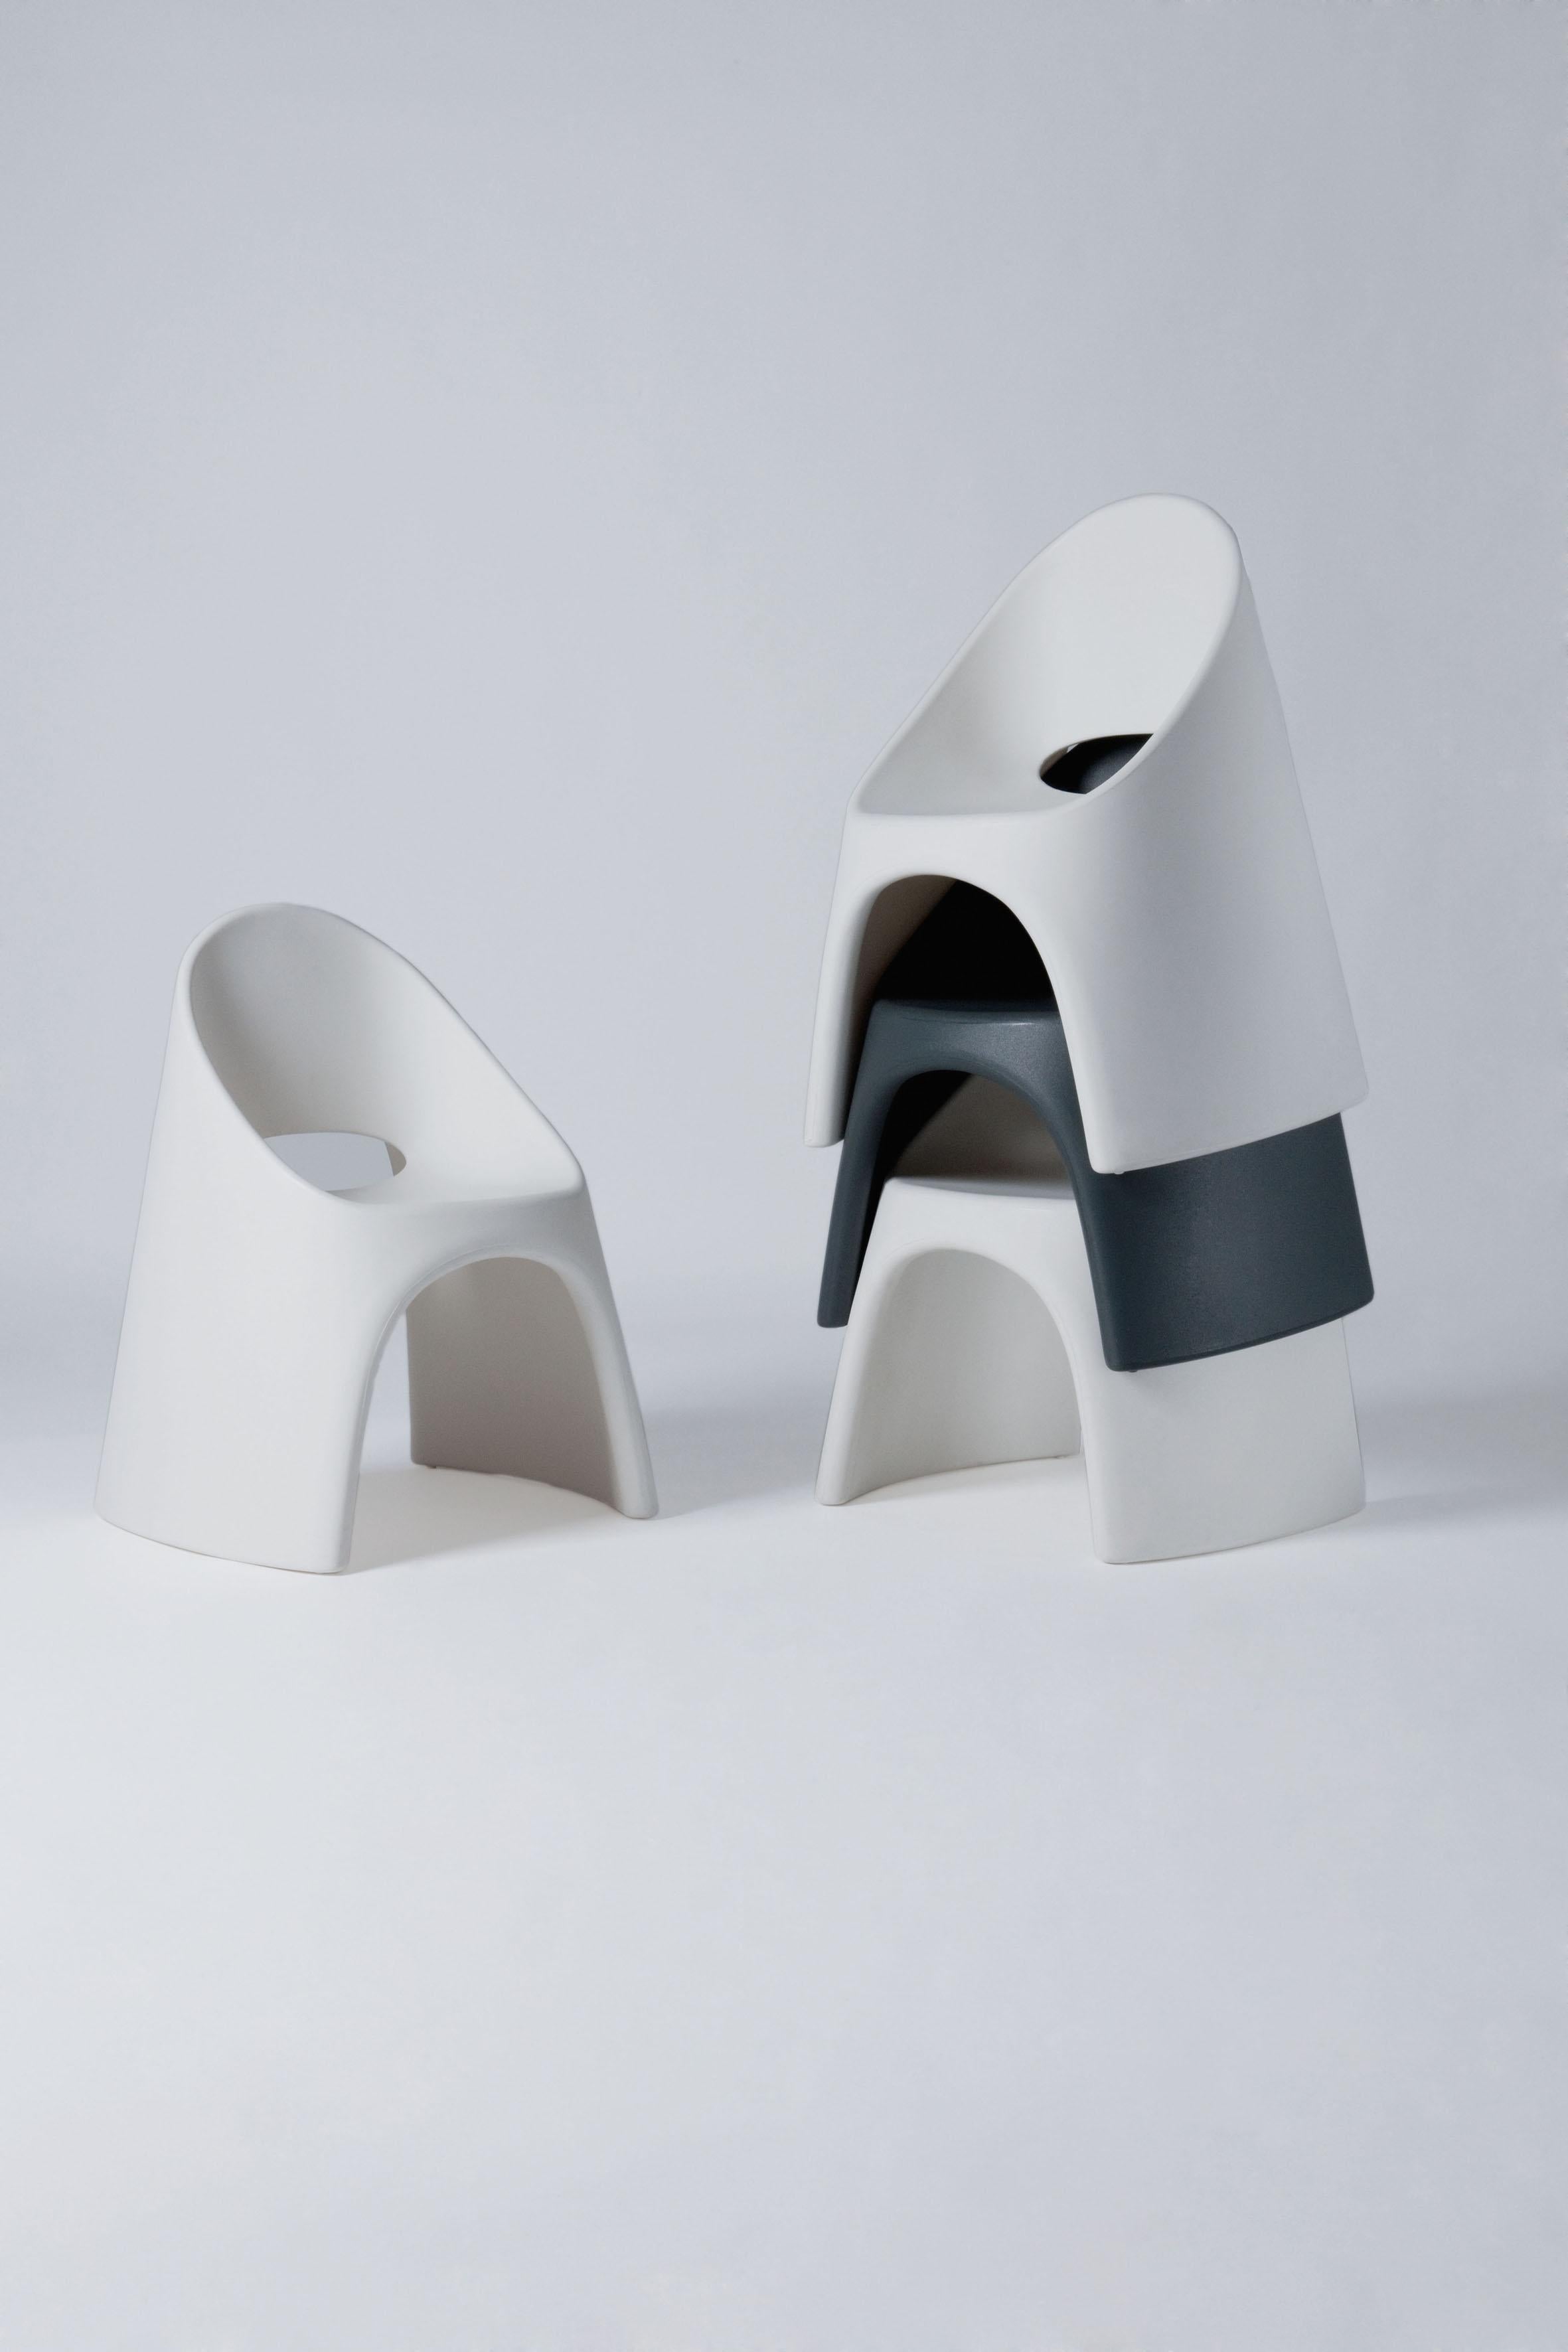 Italian Slide Design Amélie Chair in Sweet Fuchsia by Italo Pertichini For Sale